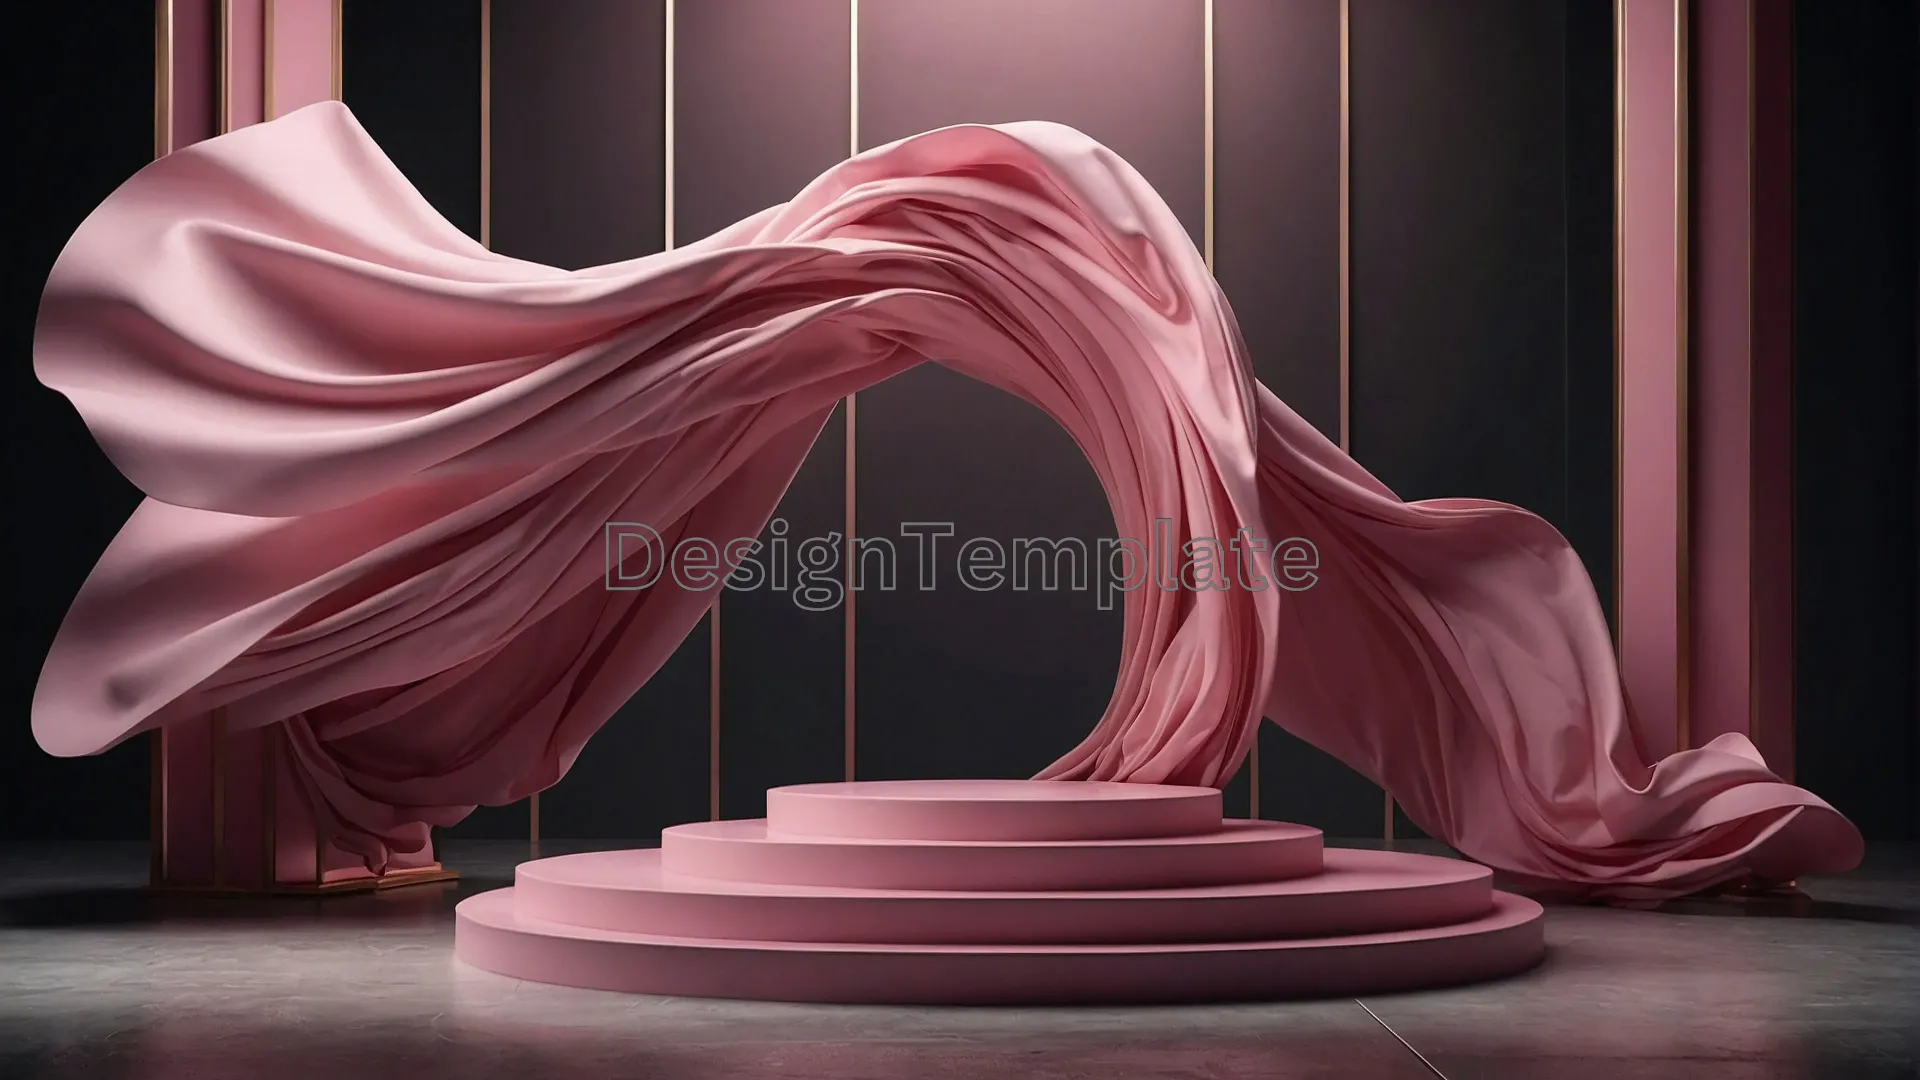 Elegant 3D Podium and Pink Cloth Image